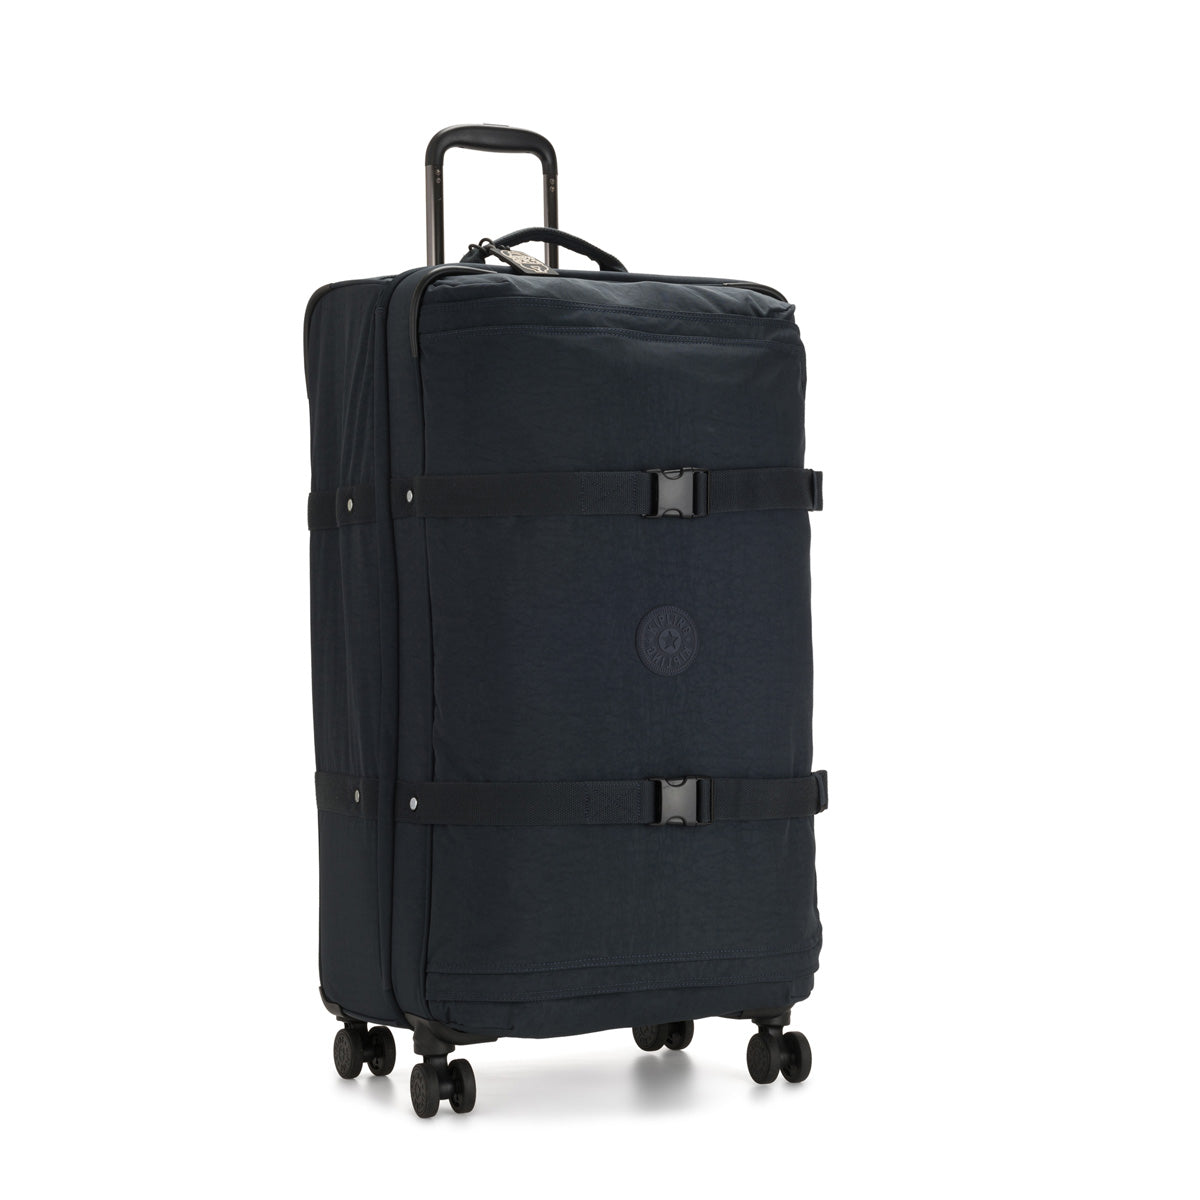 medeklinker Voor een dagje uit Verbieden Kipling Spontaneous 26" 4-Wheel Medium Luggage – Luggage Online